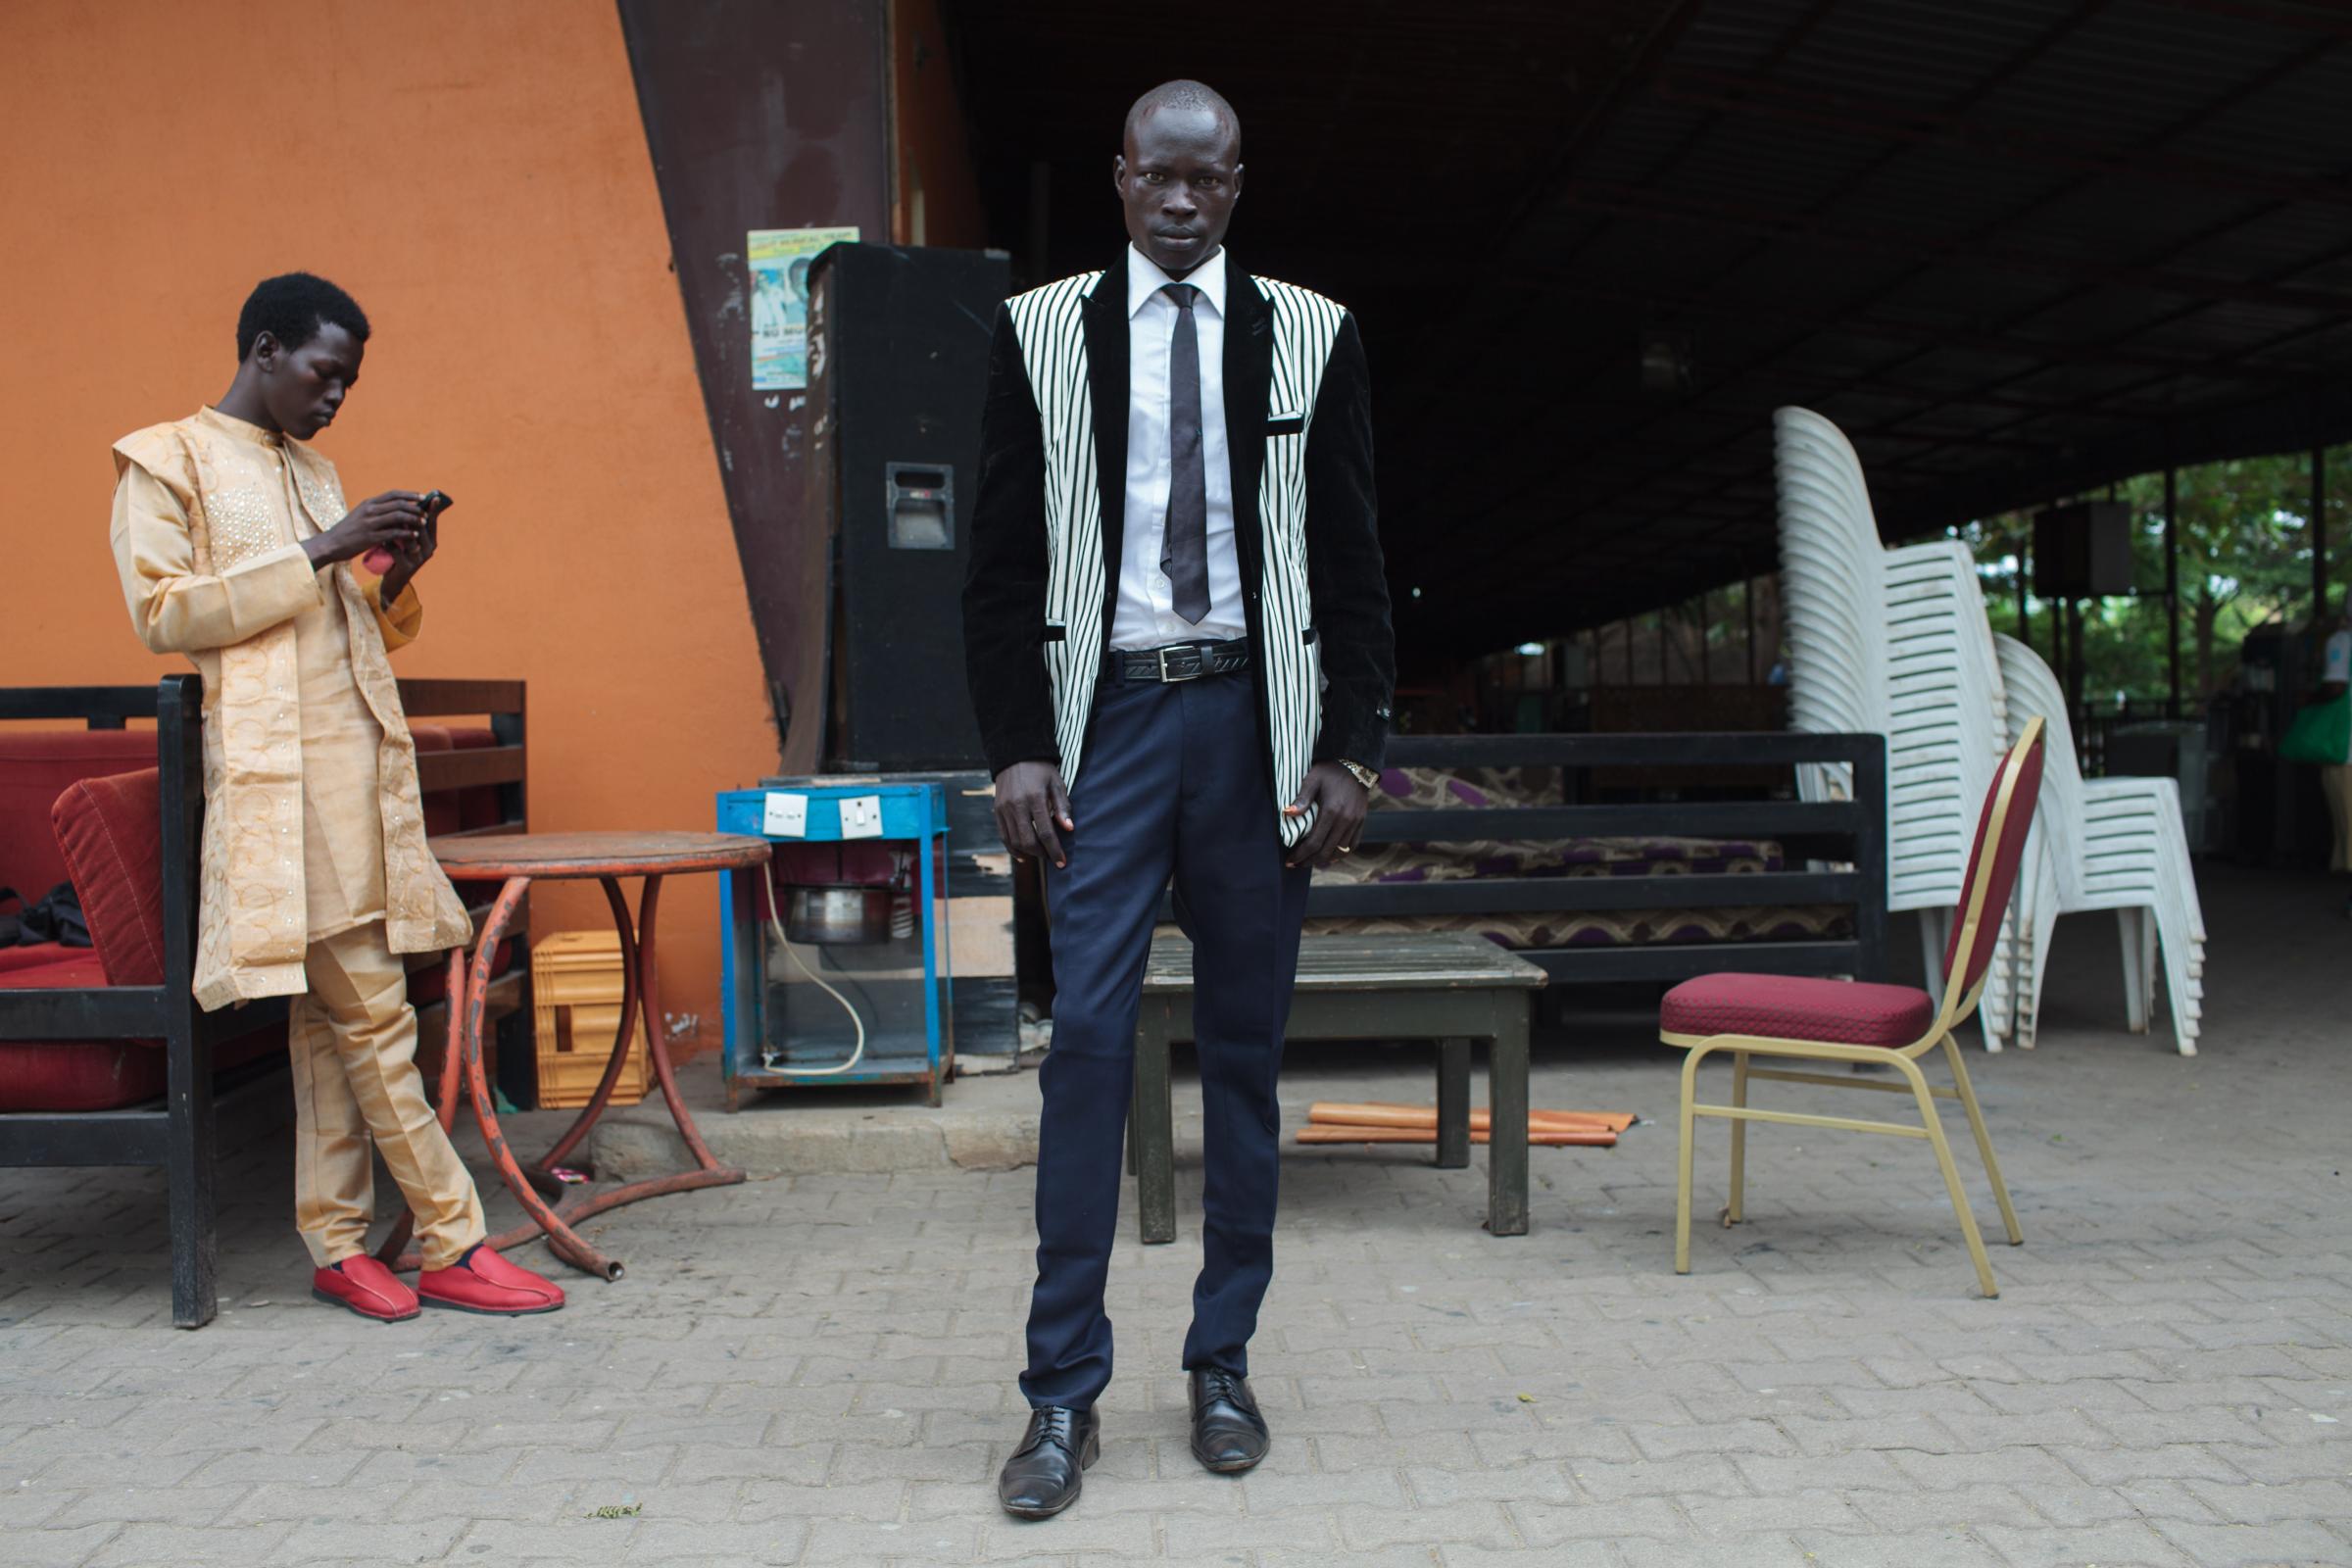 Junub - October 2/2016 – Juba, South Sudan | Joseph 23 years old at Nyakuron Cultural Center in Juba.

“I...